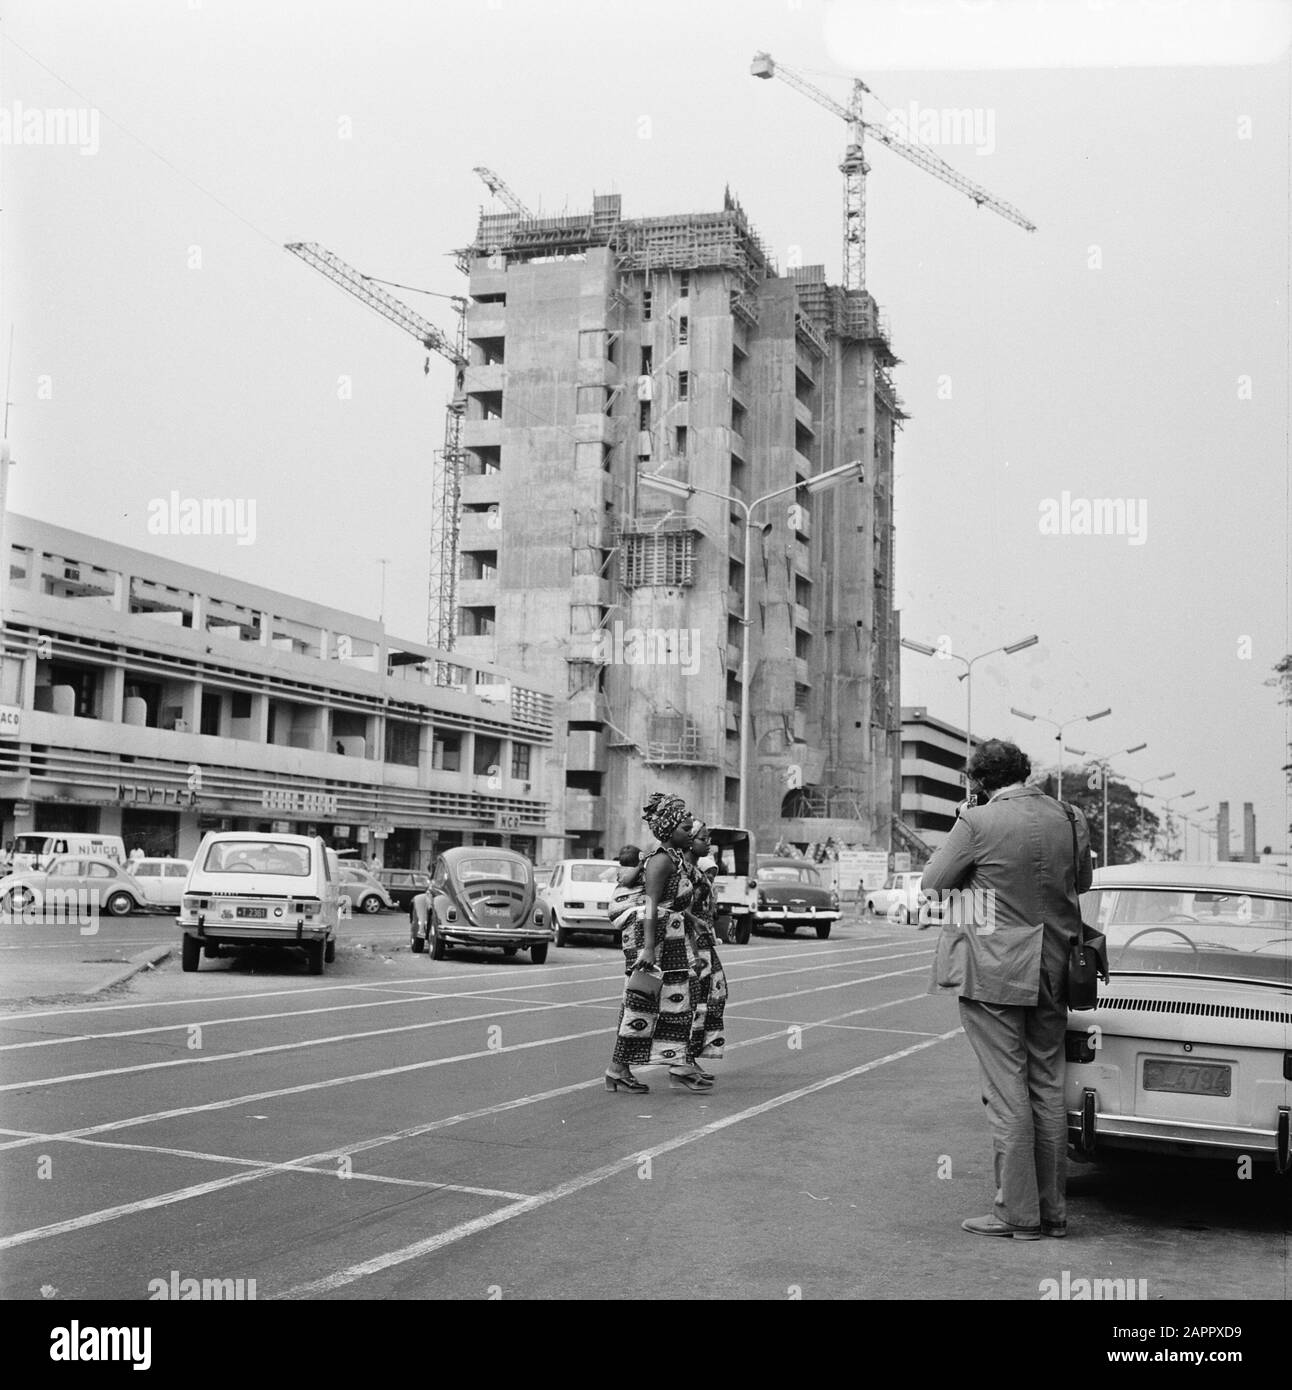 Zaire (ehemals Belgischer Kongo) Streetscape in Kinshasa Datum: 24. Oktober 1973 Ort: Kongo, Kinshasa, Zaire Schlüsselwörter: Bauarbeiten, Stadtansichten Stockfoto